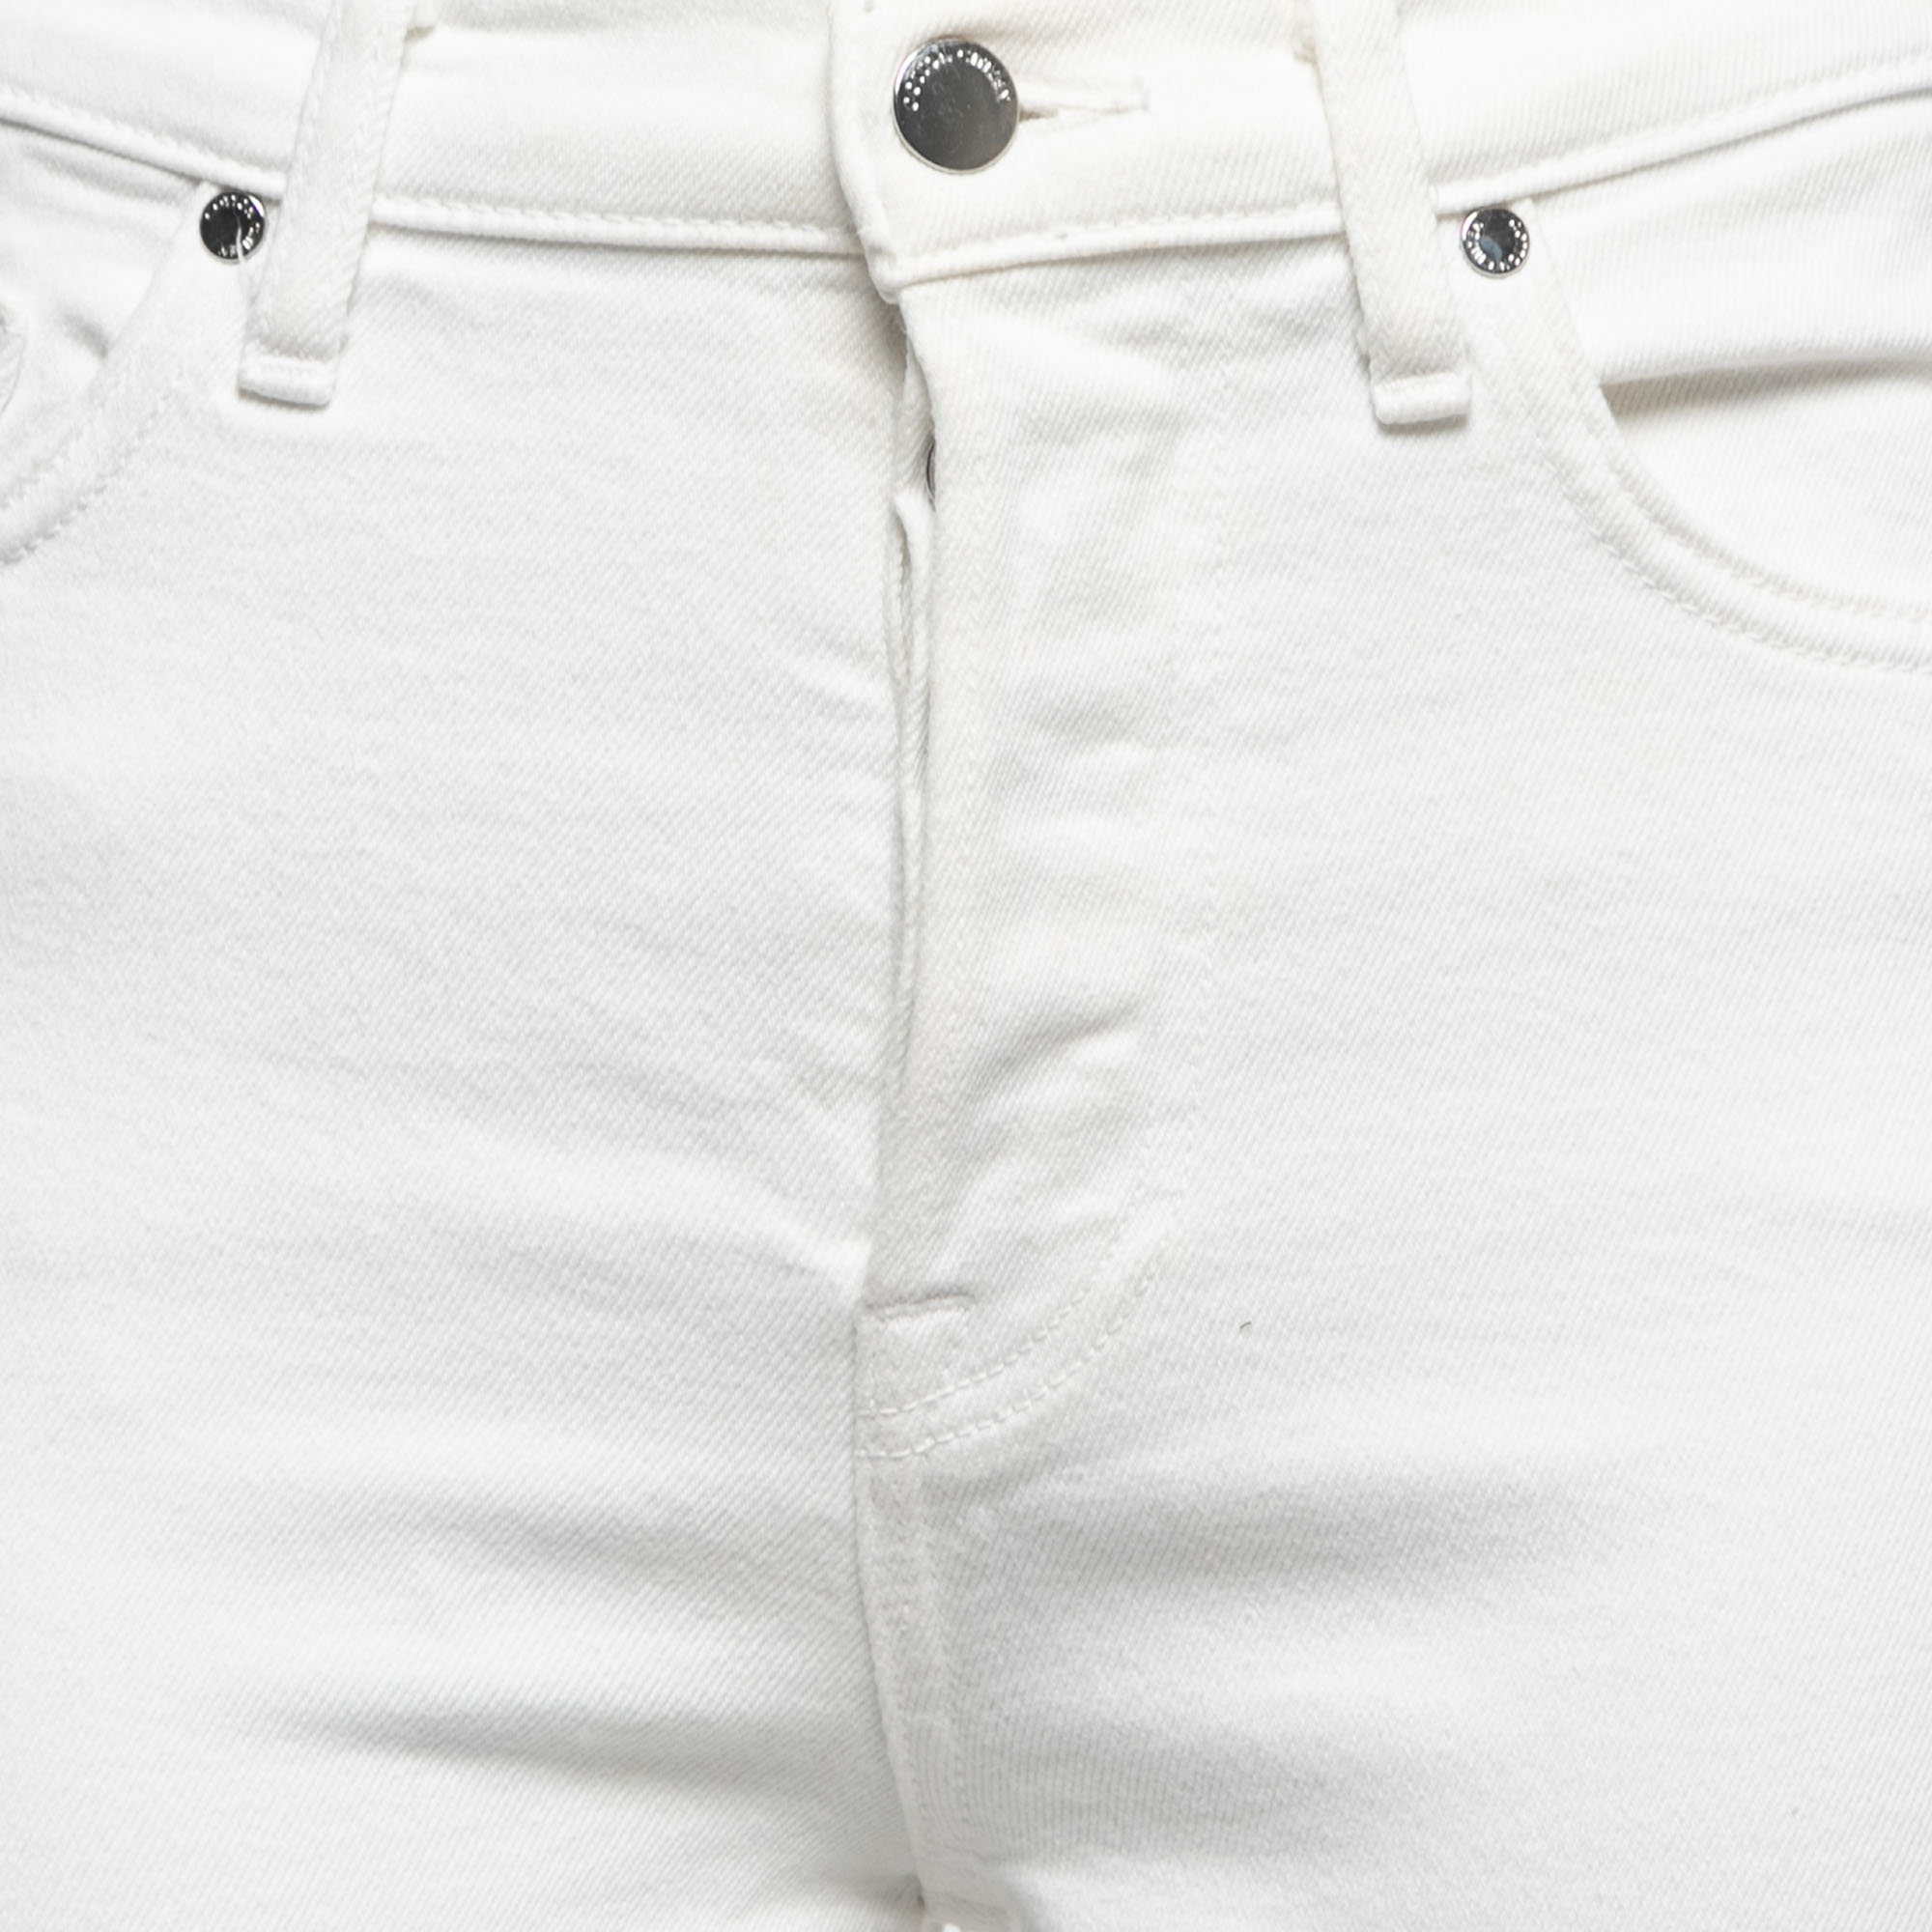 Cotton Citizen White Denim Medium Rise Slim Fit Jeans S Waist 25